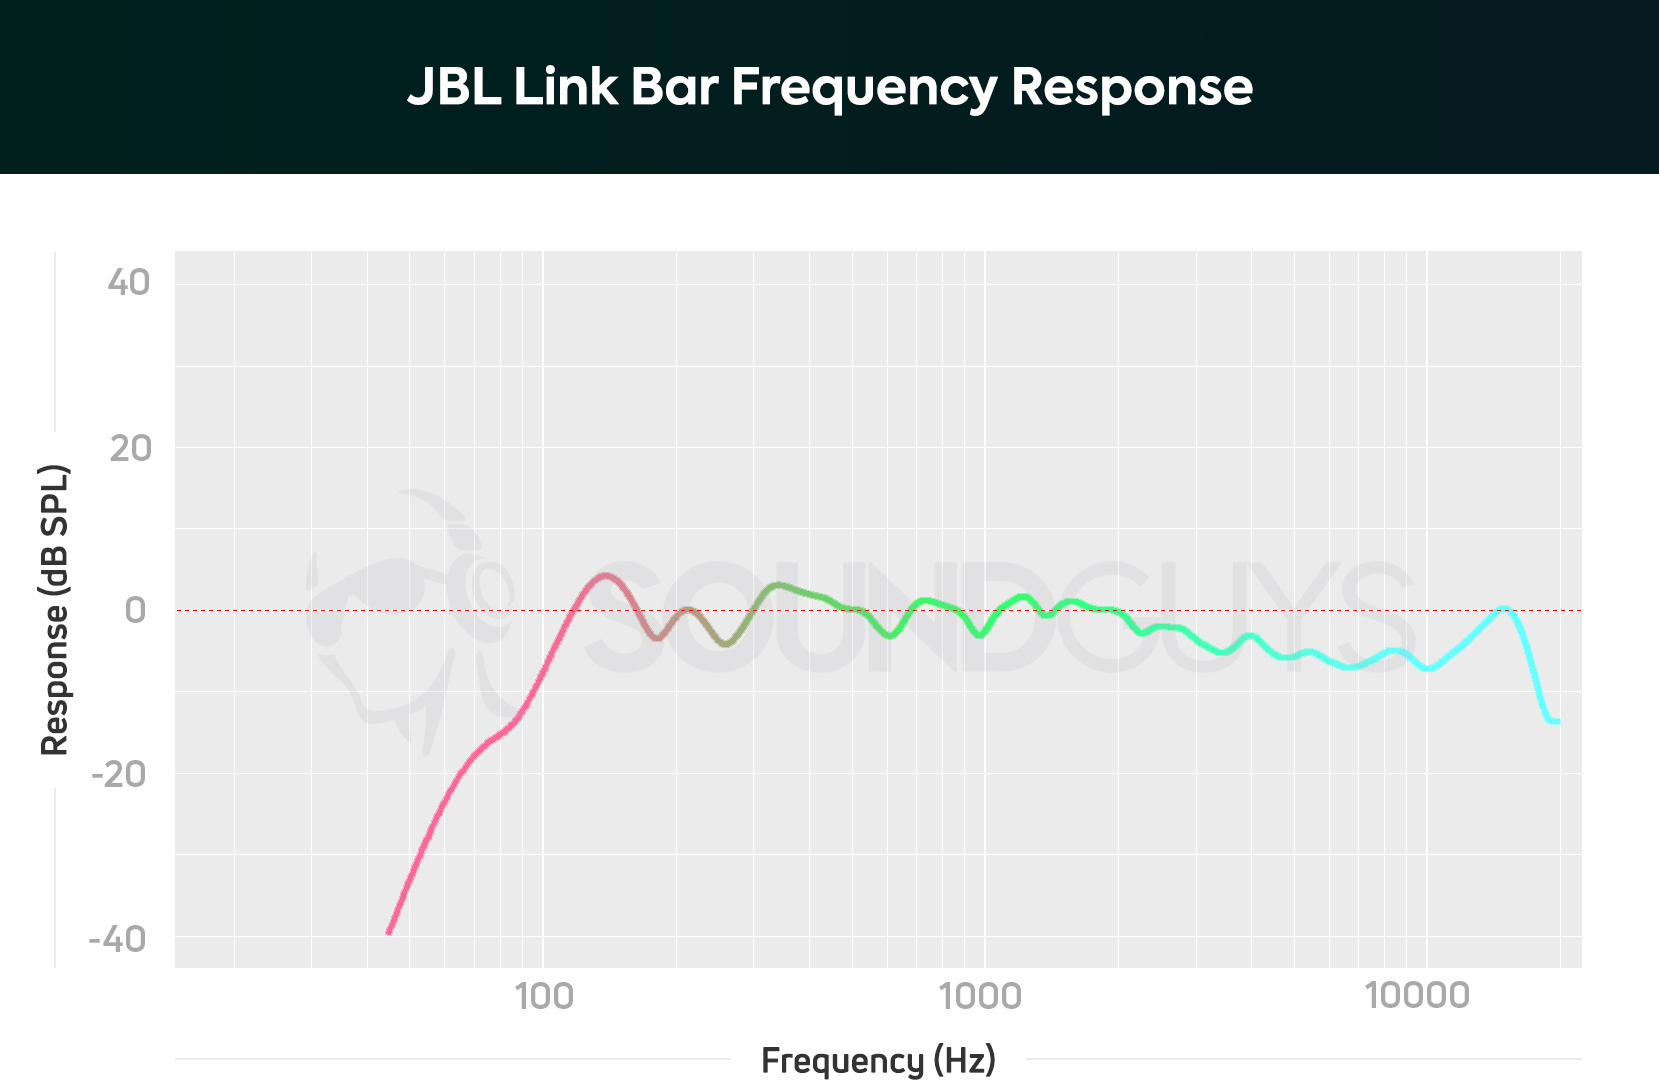 JBL Link Bar frequency response chart.